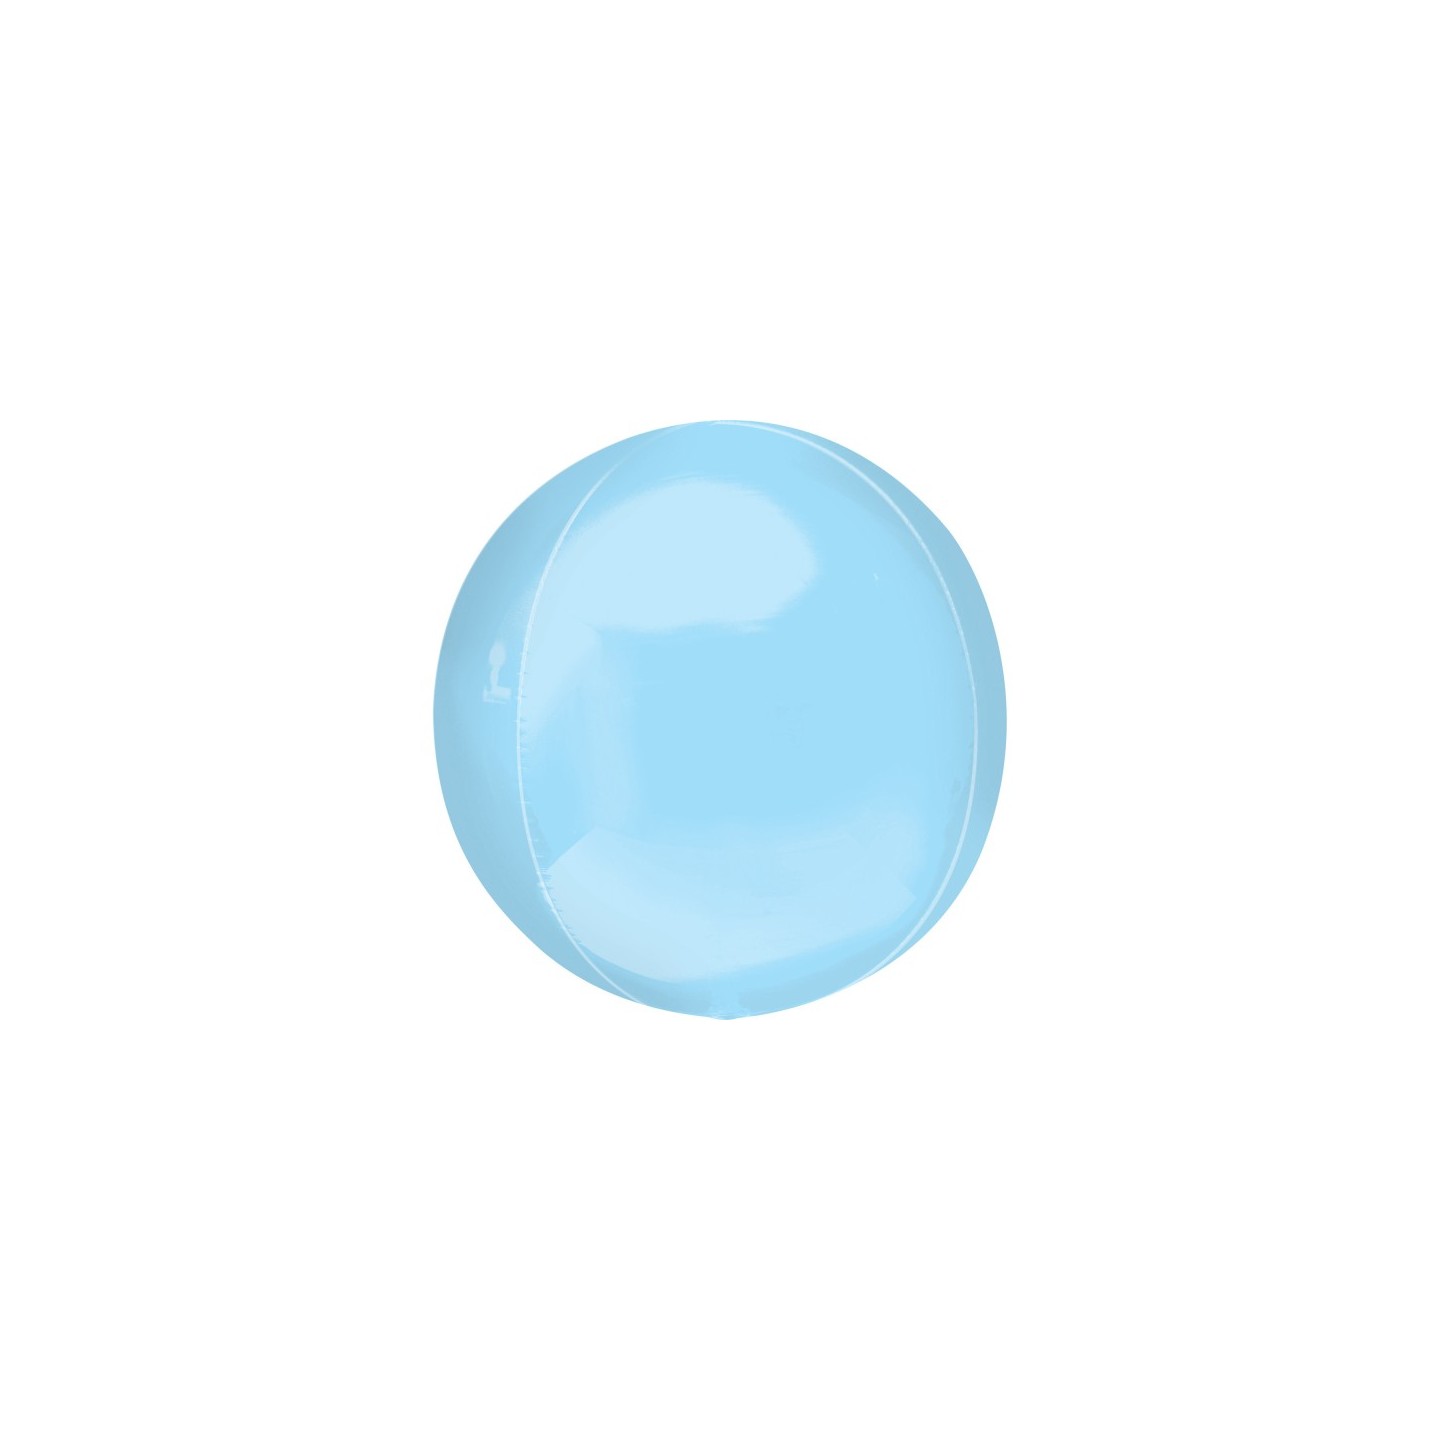 Folieballon onbedrukt orbz pastel blauw rond